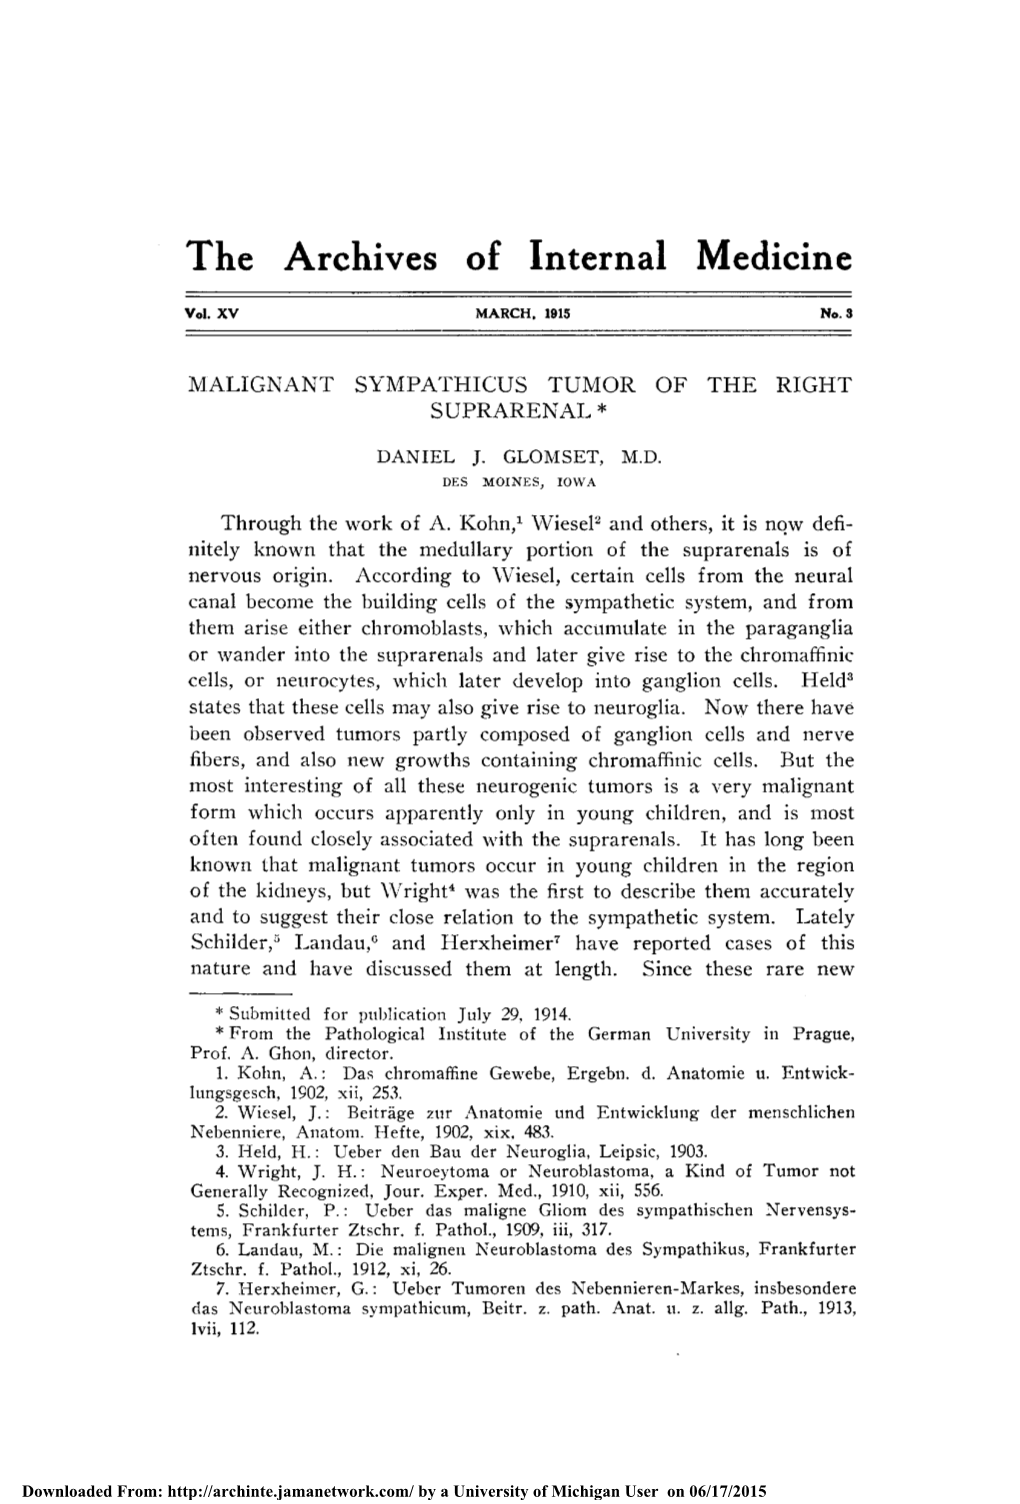 The Archivesof Internal Medicine